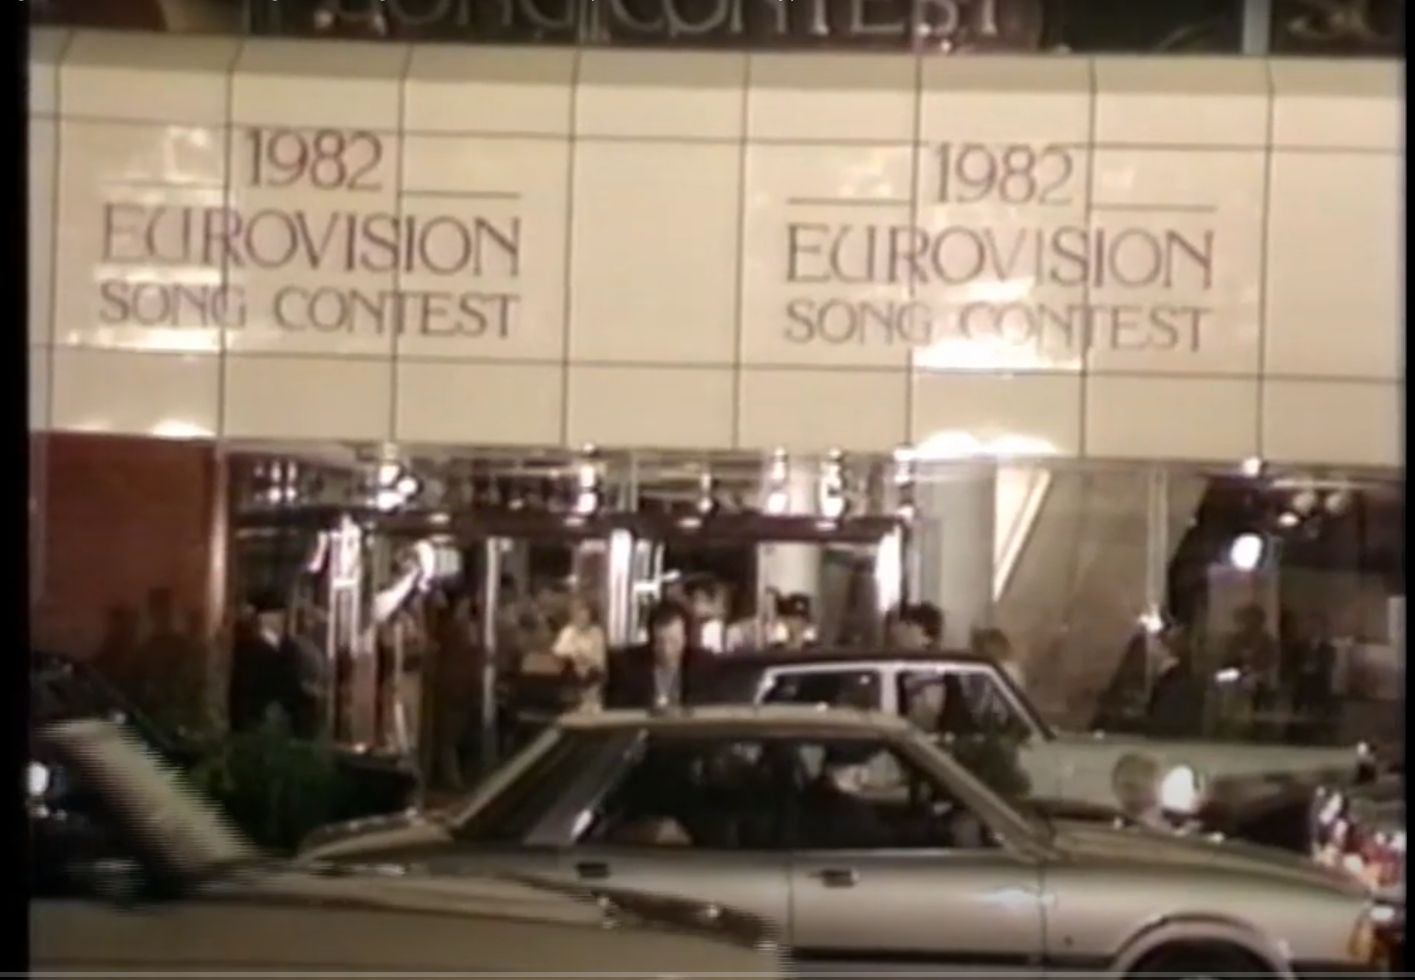 1982 Eurovision pic BBC